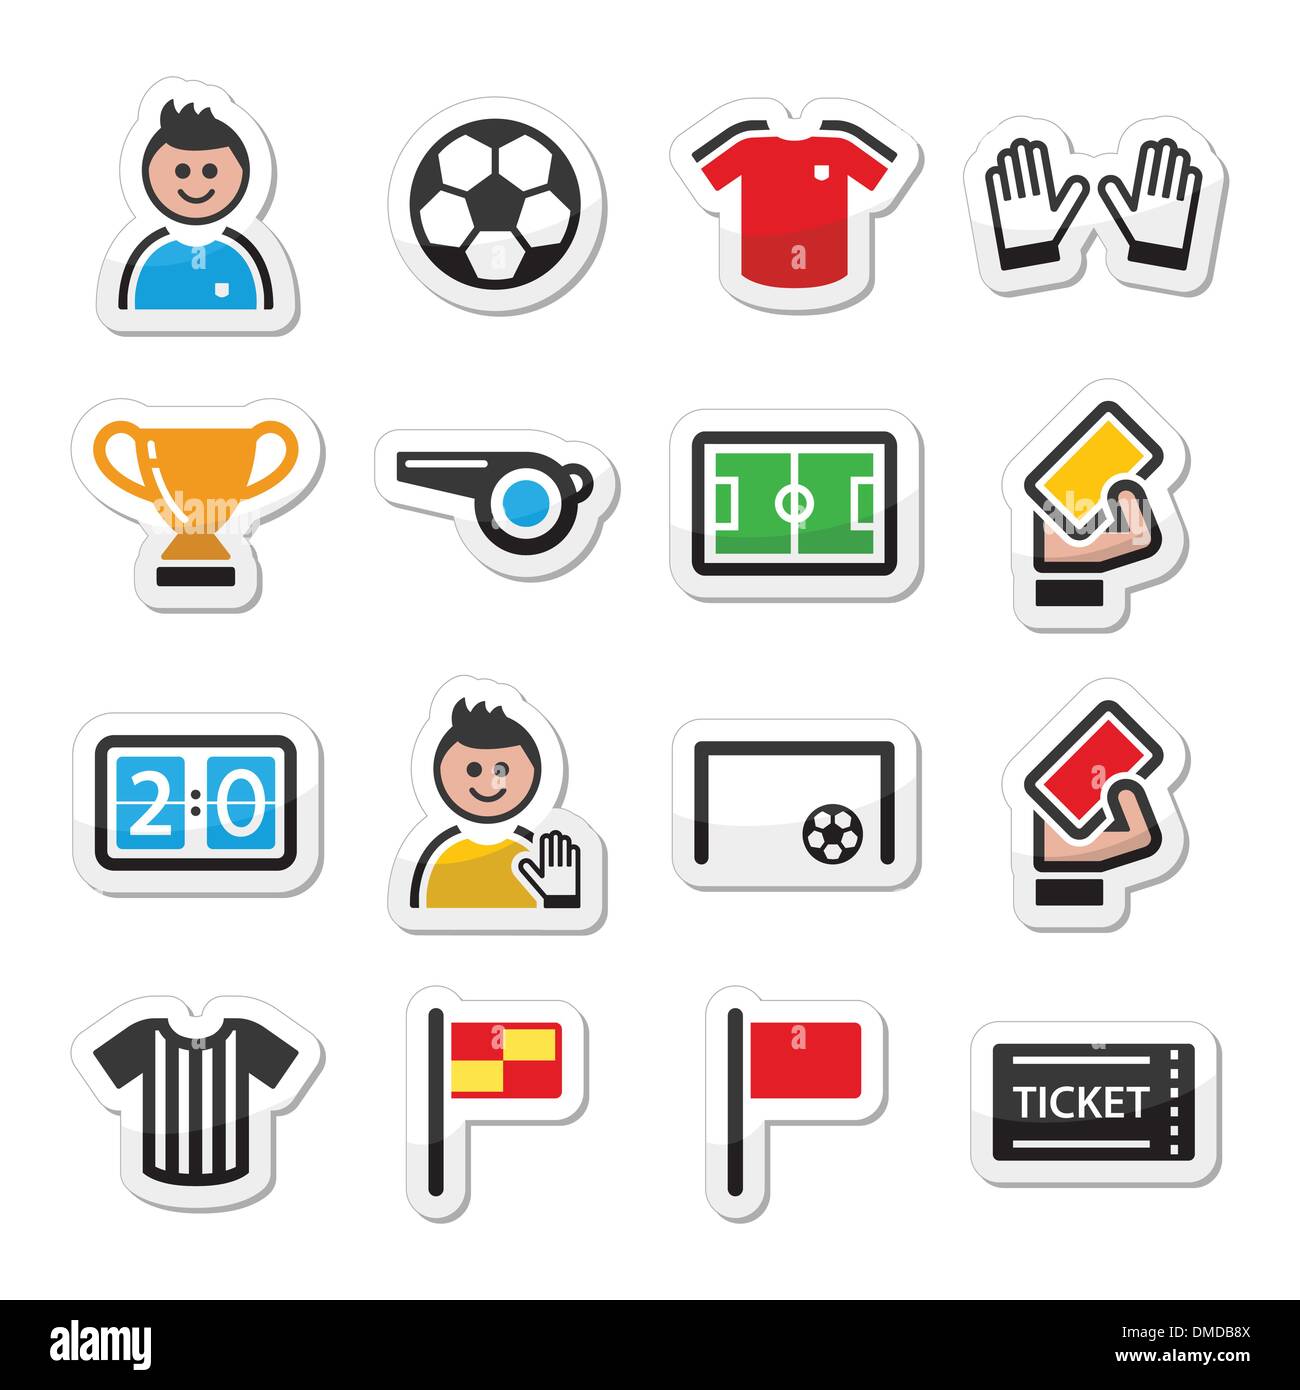 Soccer / football vector icons set Stock Vector